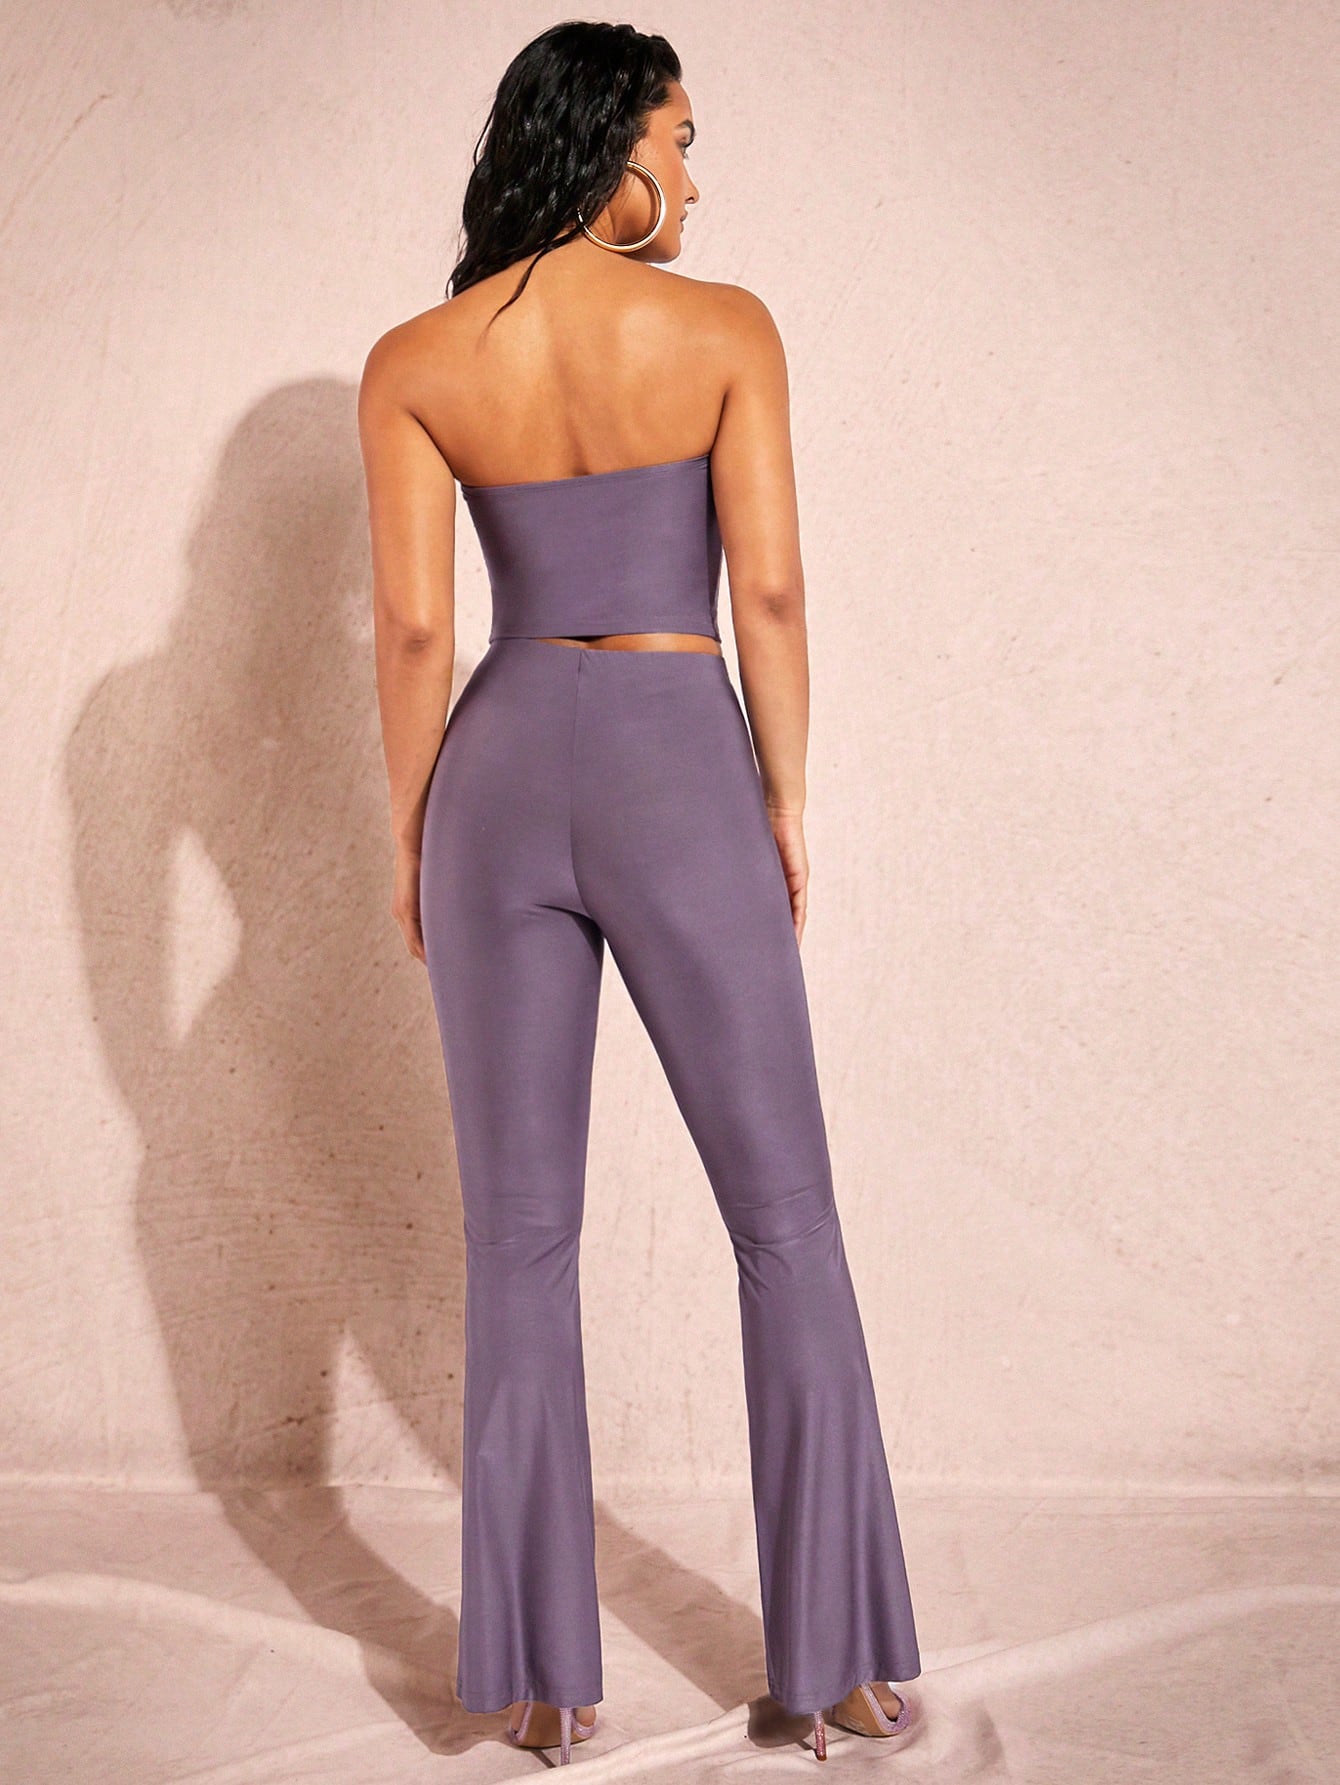 Purple Pants Outfit - Fashion photos - DotingSage - trendMe.net